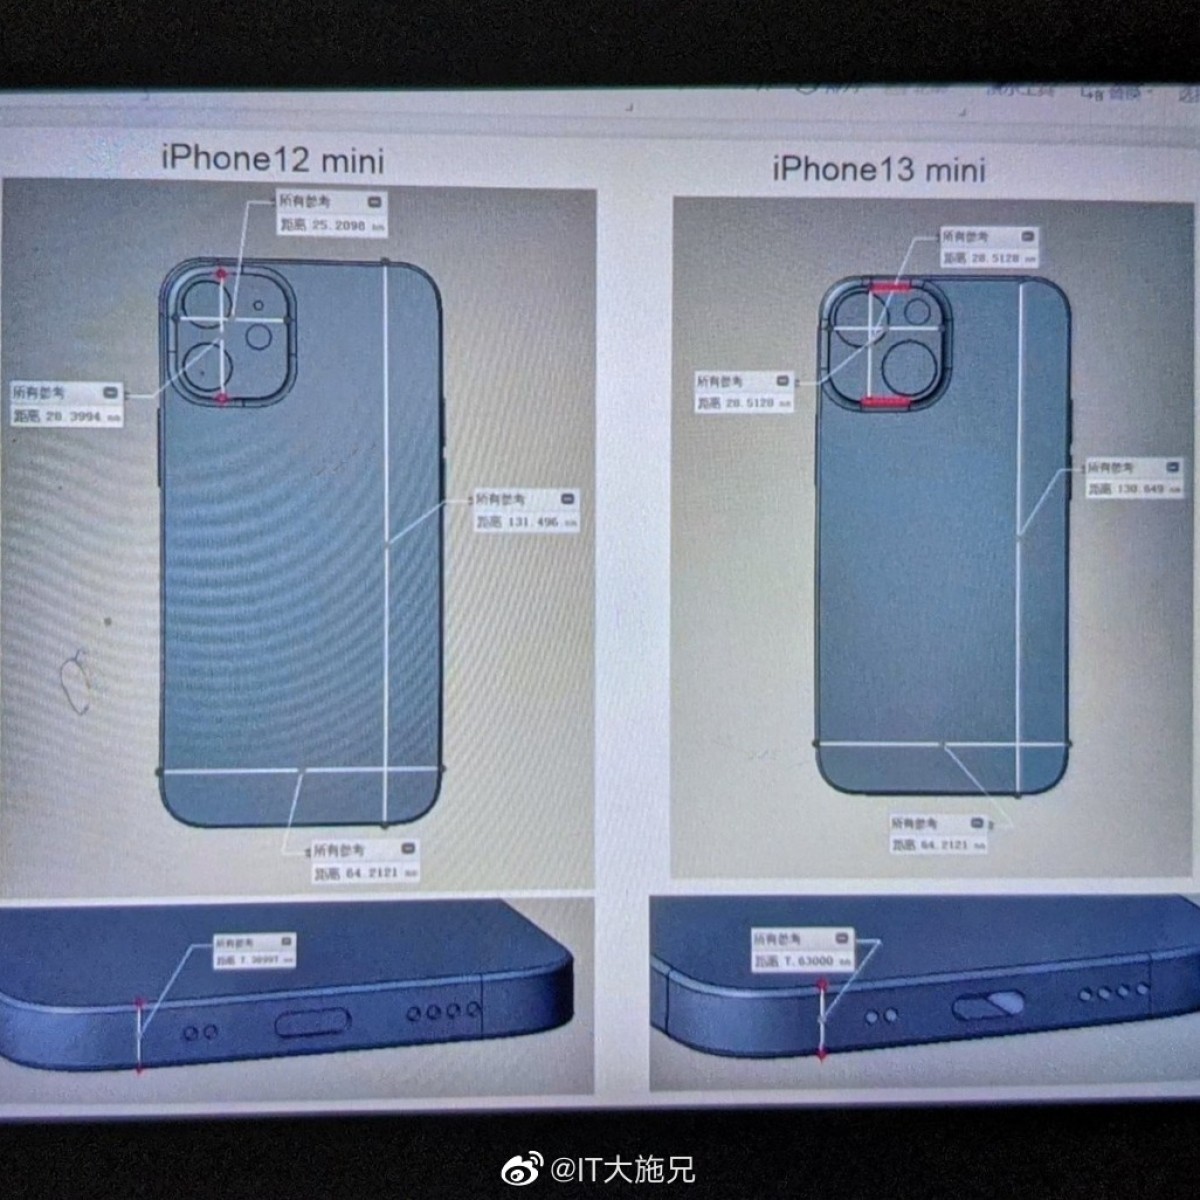 Apple iPhone 13 mini leak suggests new dual camera module